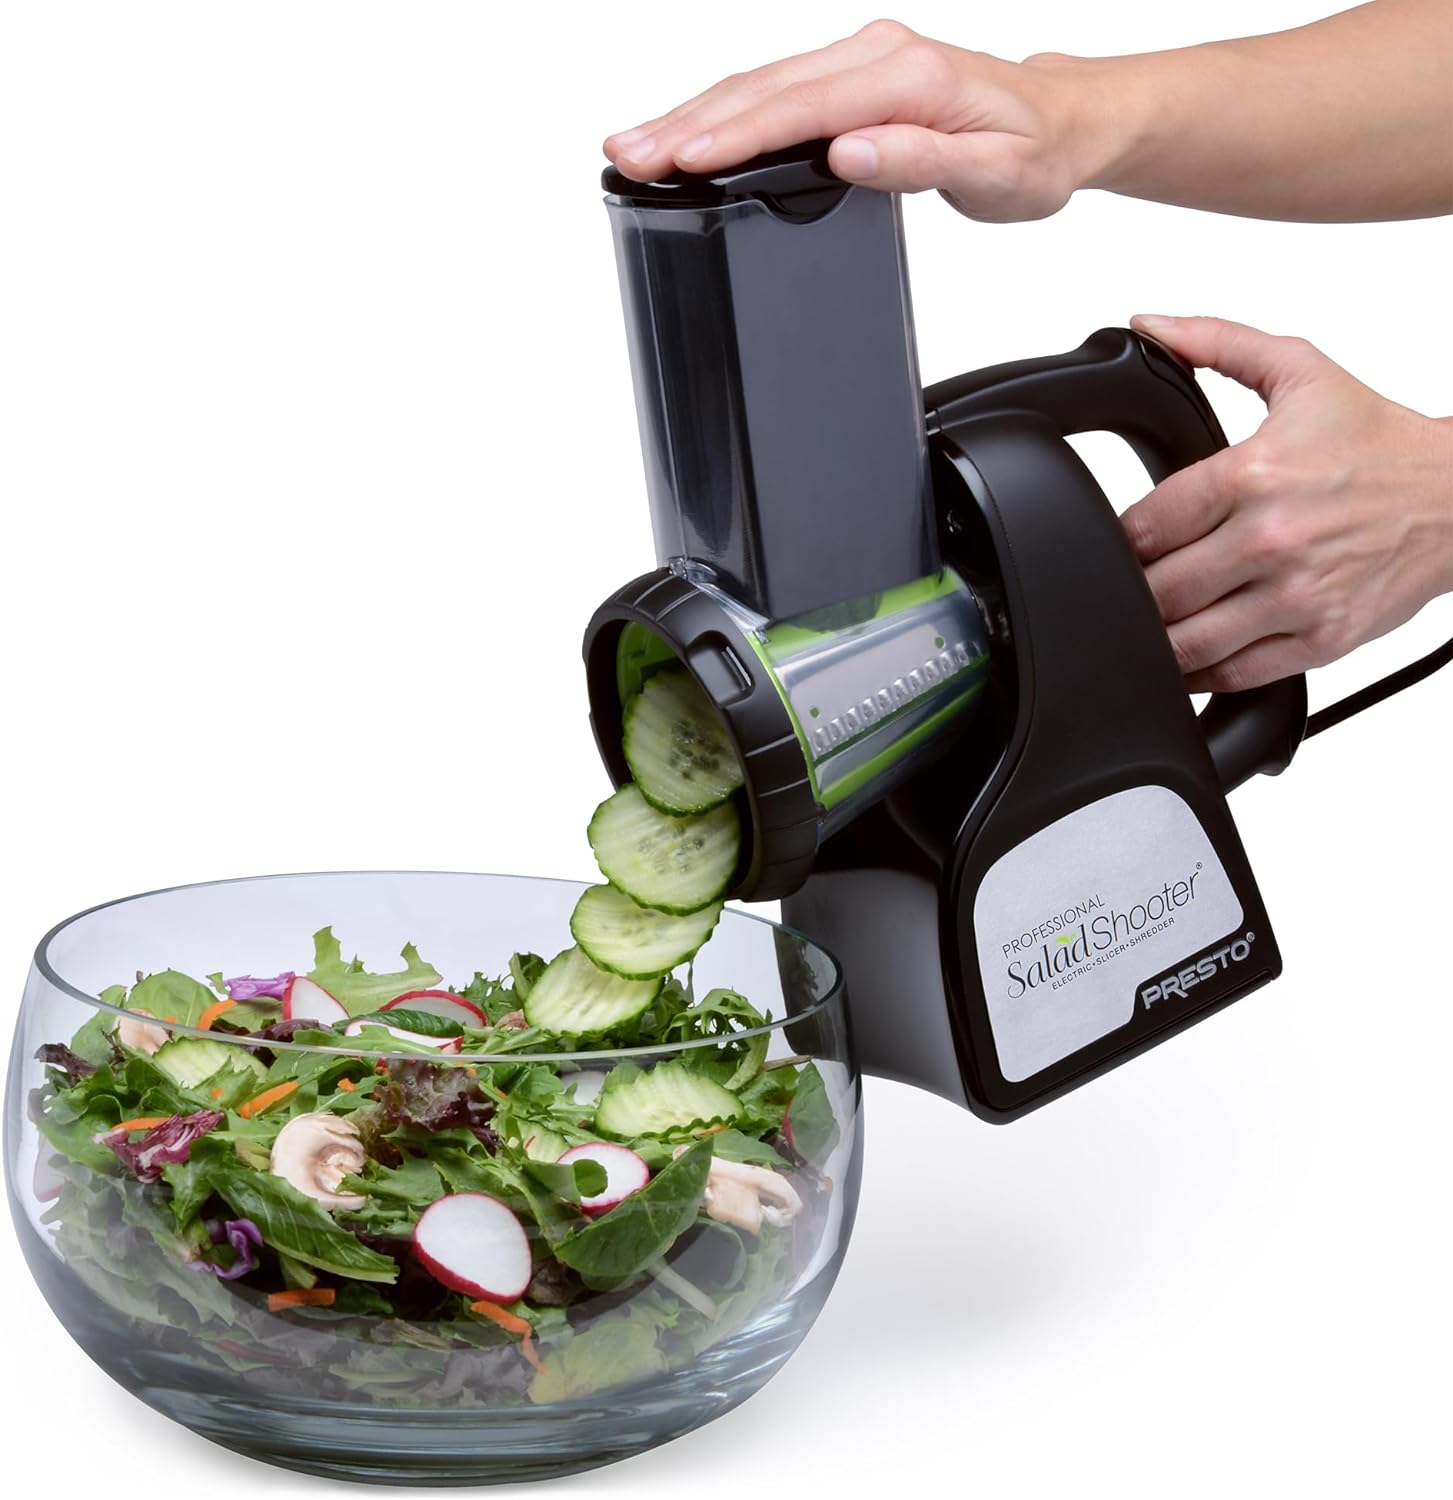 Professional SaladShooter Electric Slicer